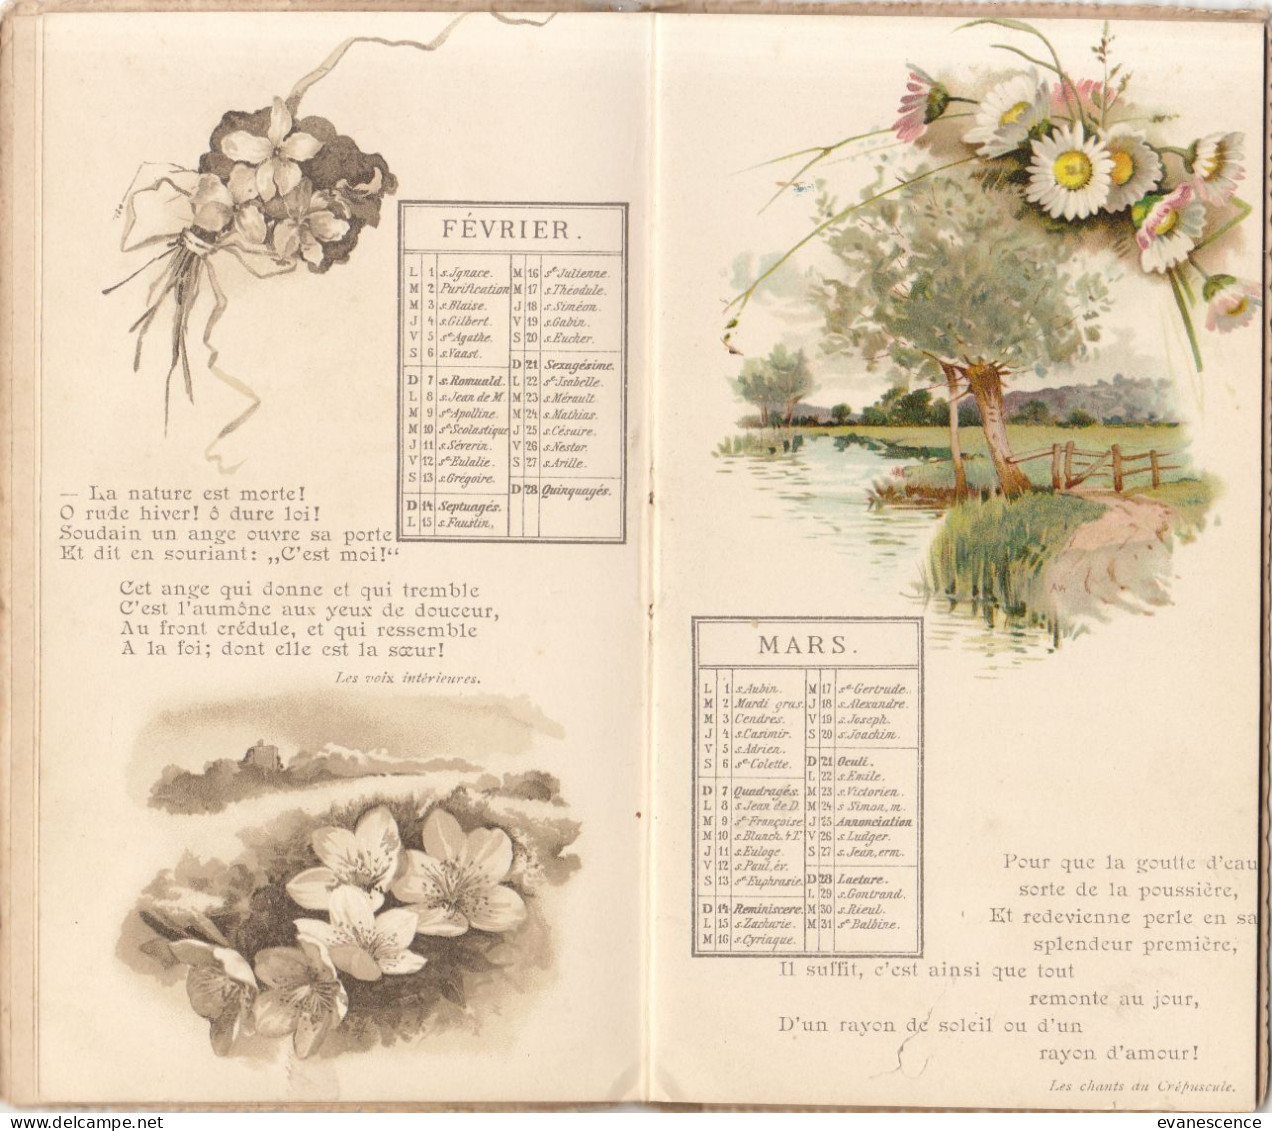 Calendrier Victor Hugo De 1897 : RARE    ///   Ref. Mai 23 - Tamaño Grande : ...-1900